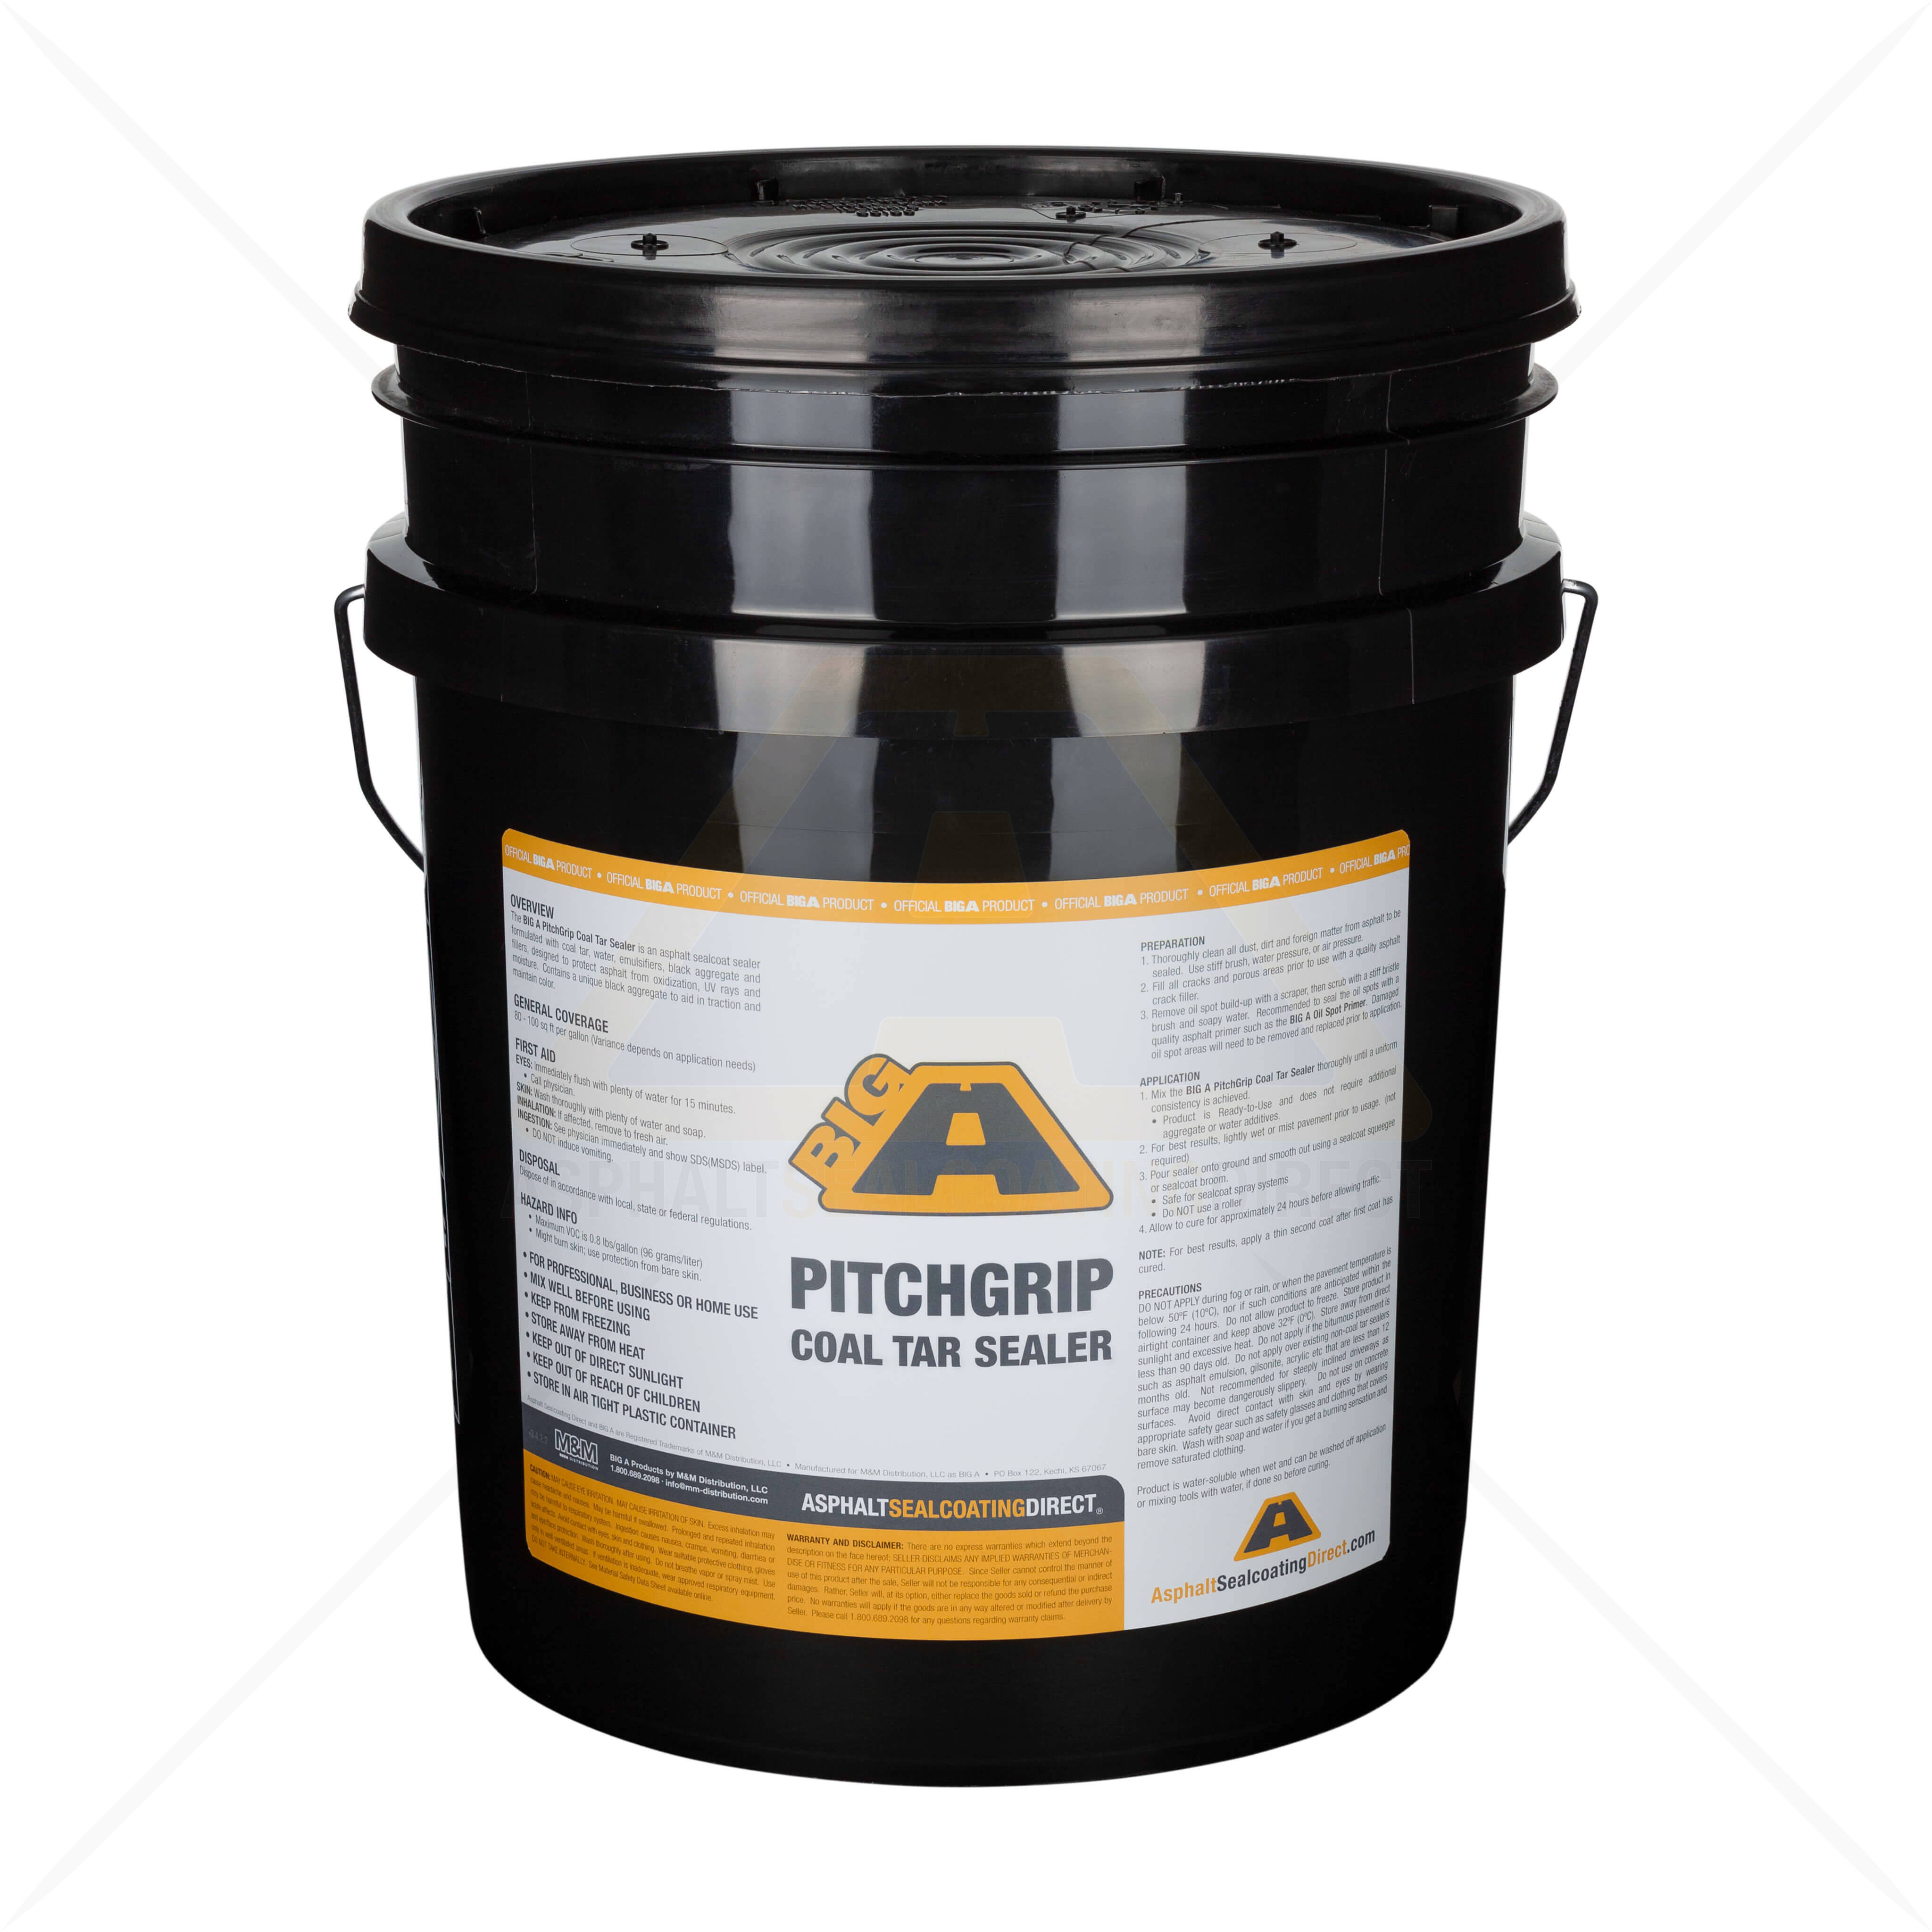 Concrete BIGA 5 Gallon Bucket Sealcoat Paint or Material Mixer